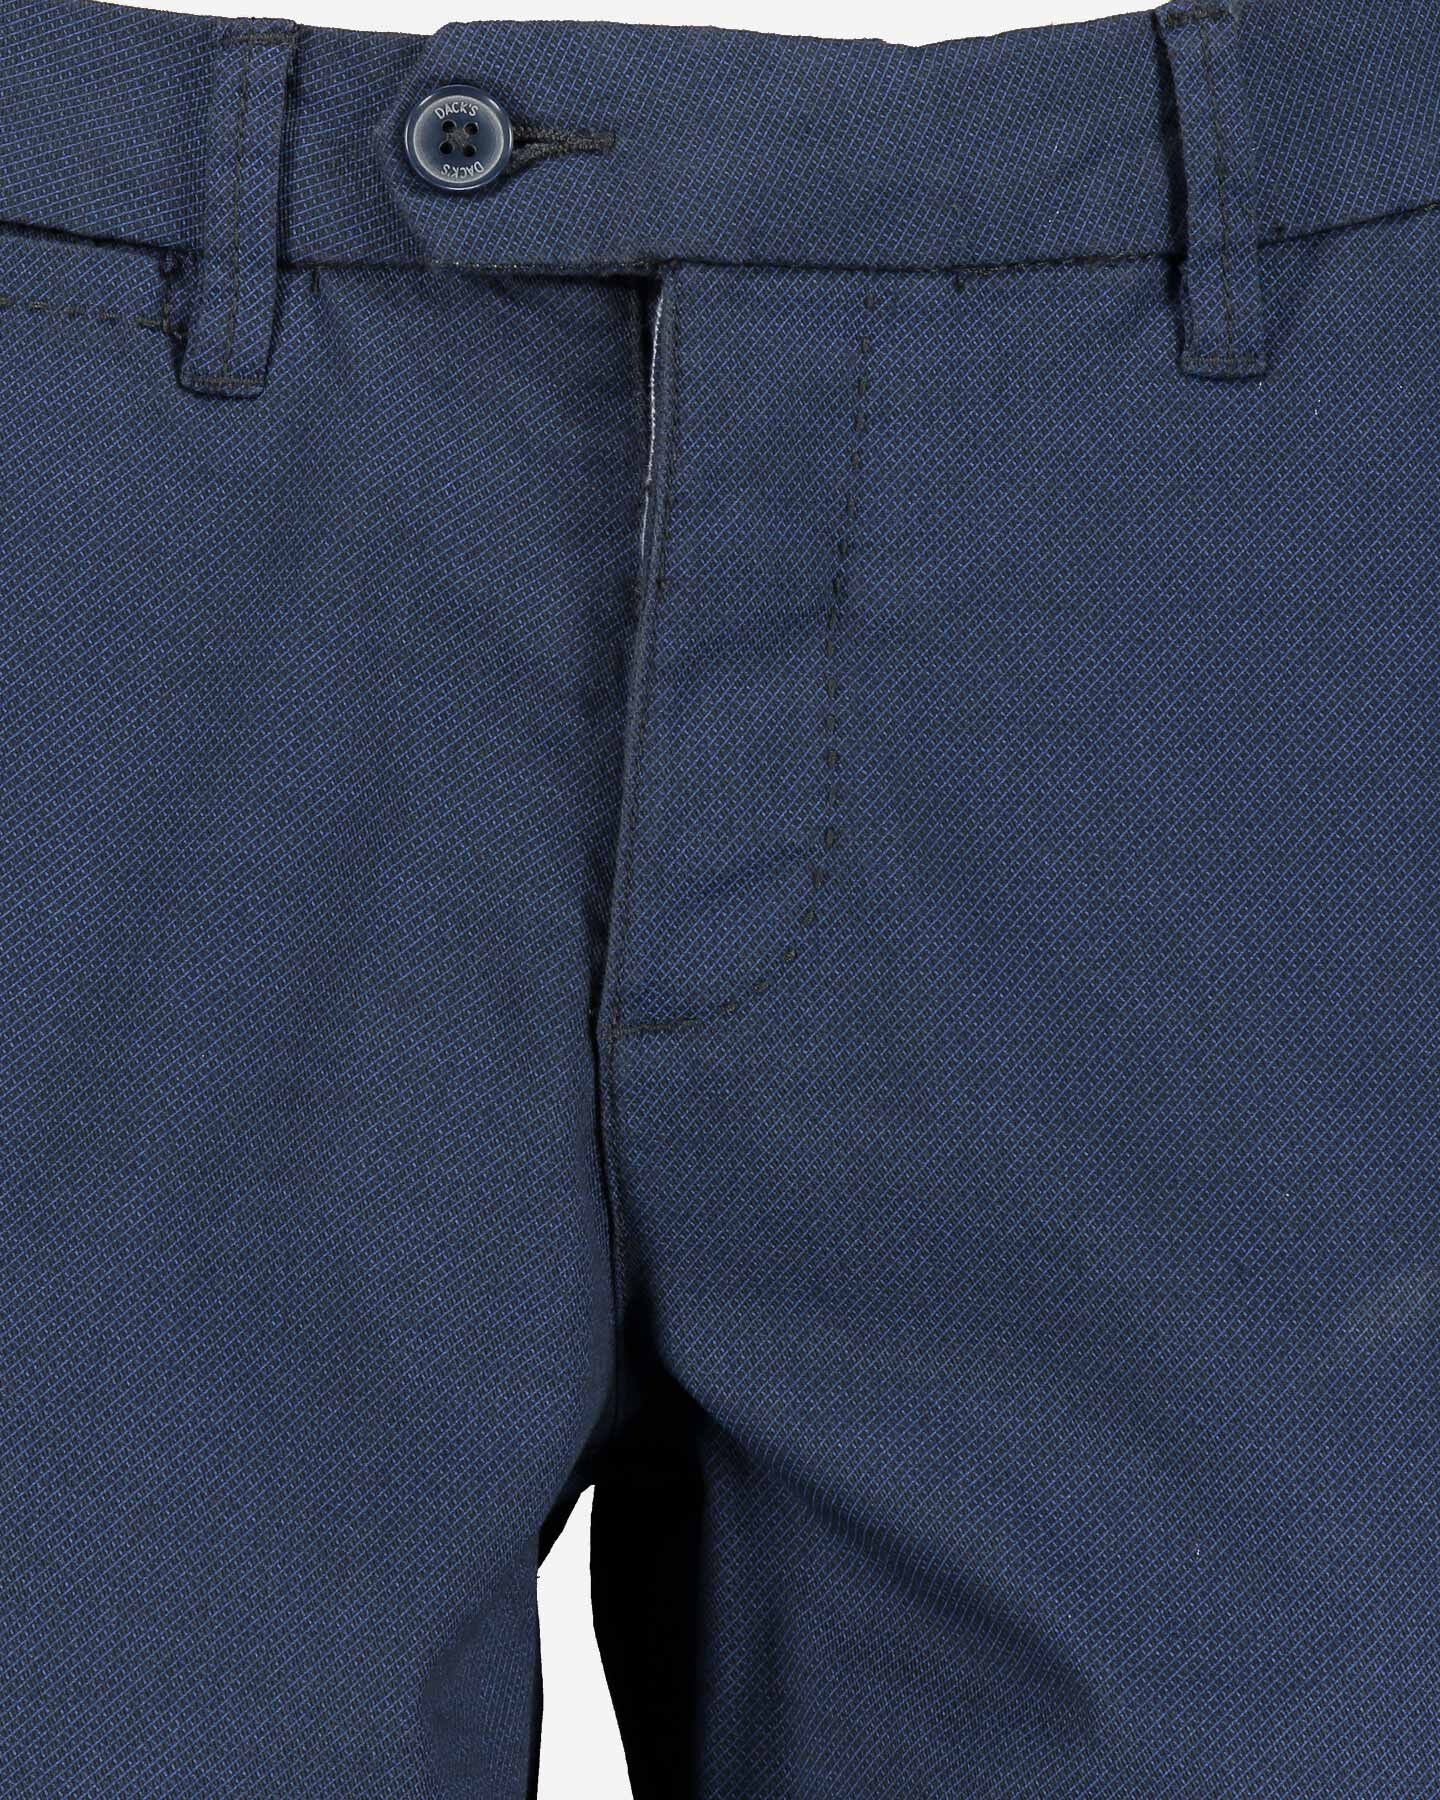  Pantalone DACK'S CHINO STRETCH M S4074159|516|46 scatto 3